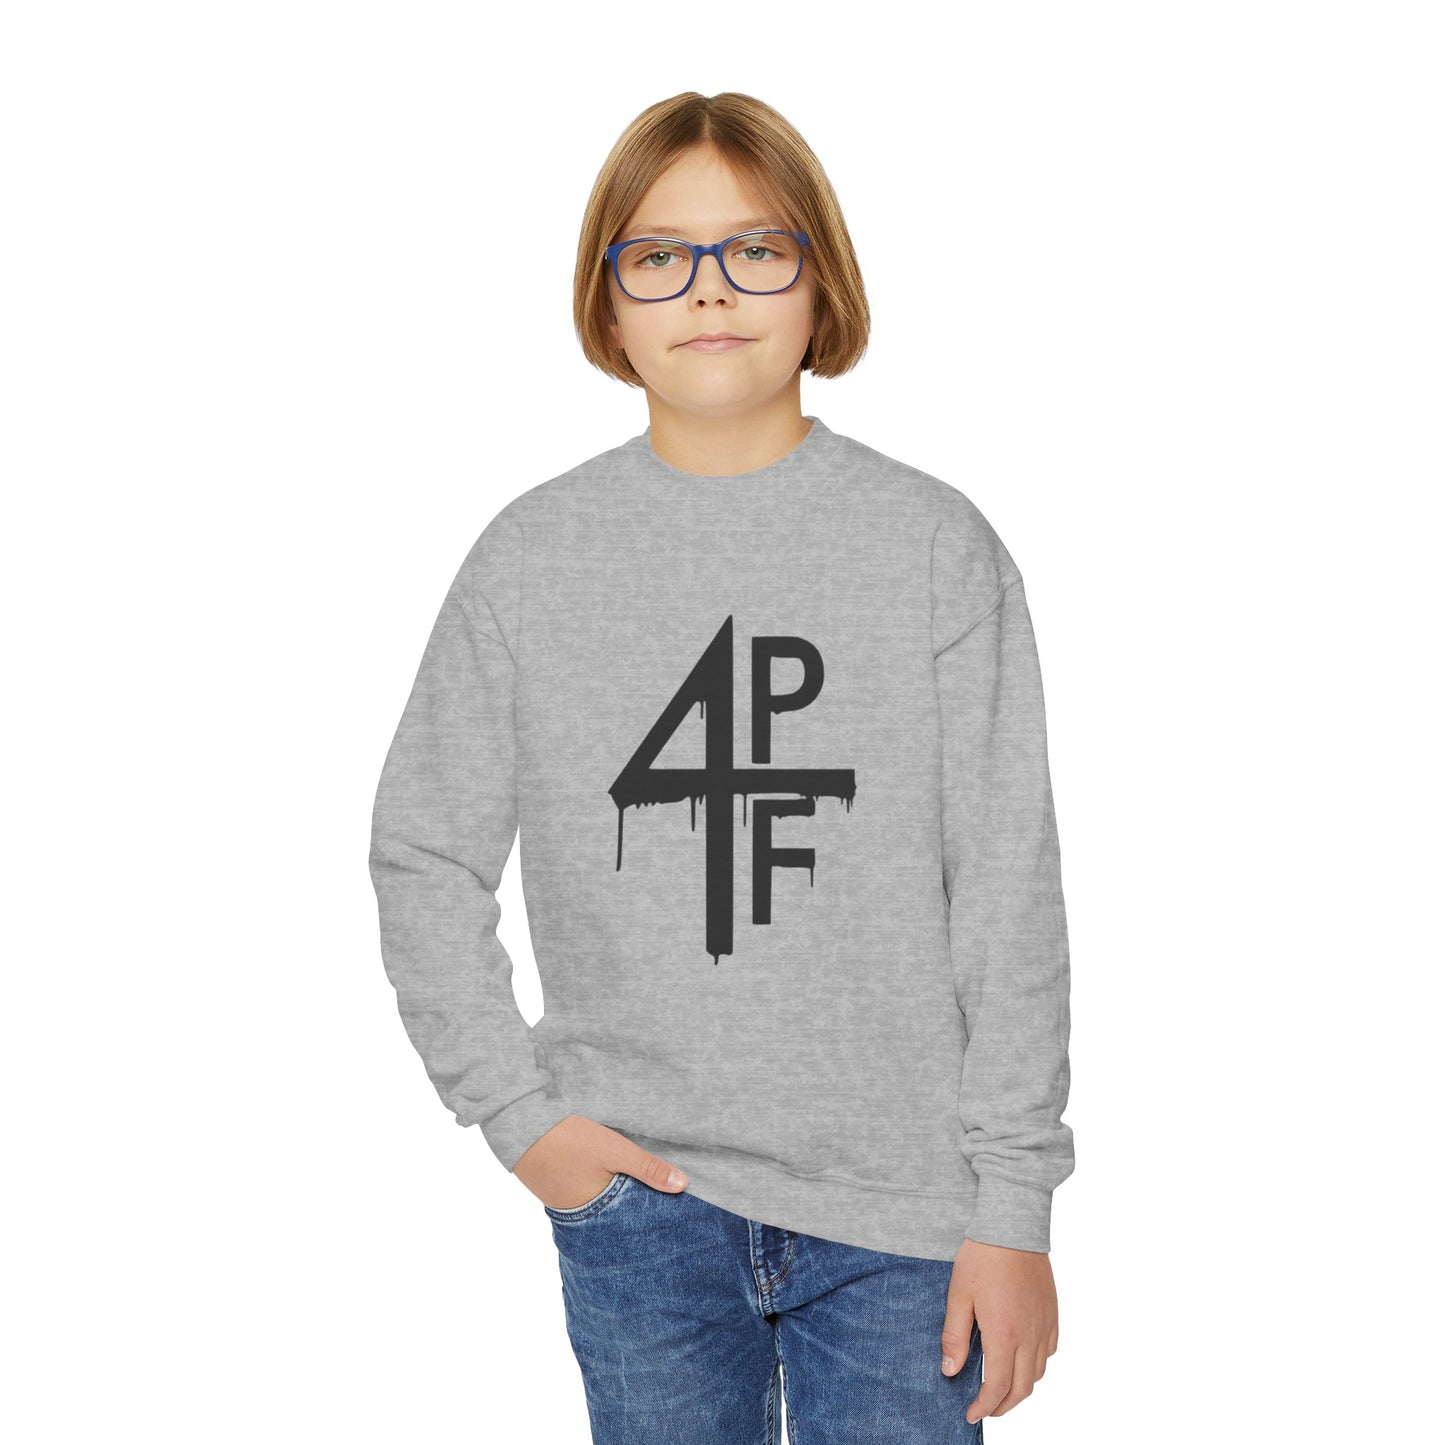 4PF Youth Sweatshirt